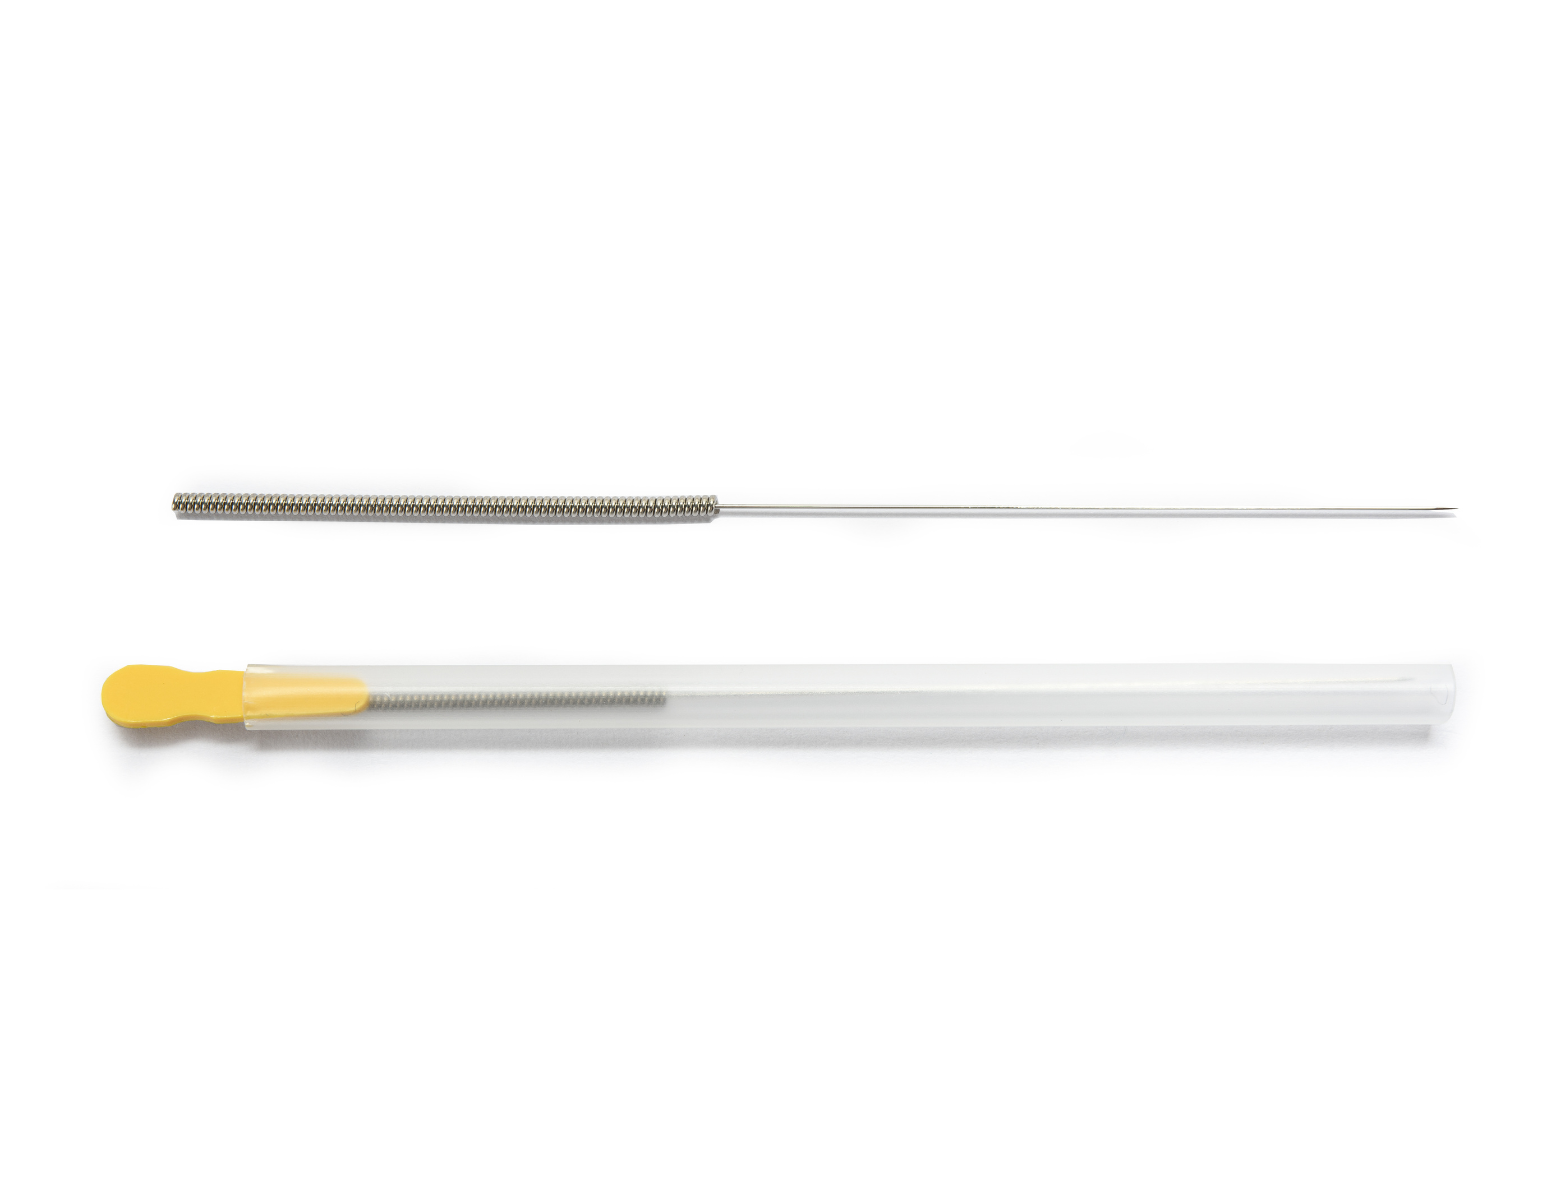 AguPunt APS Fascia / Superficial aiguille dry needling  - 0.16 x 13 mm (100 pcs)